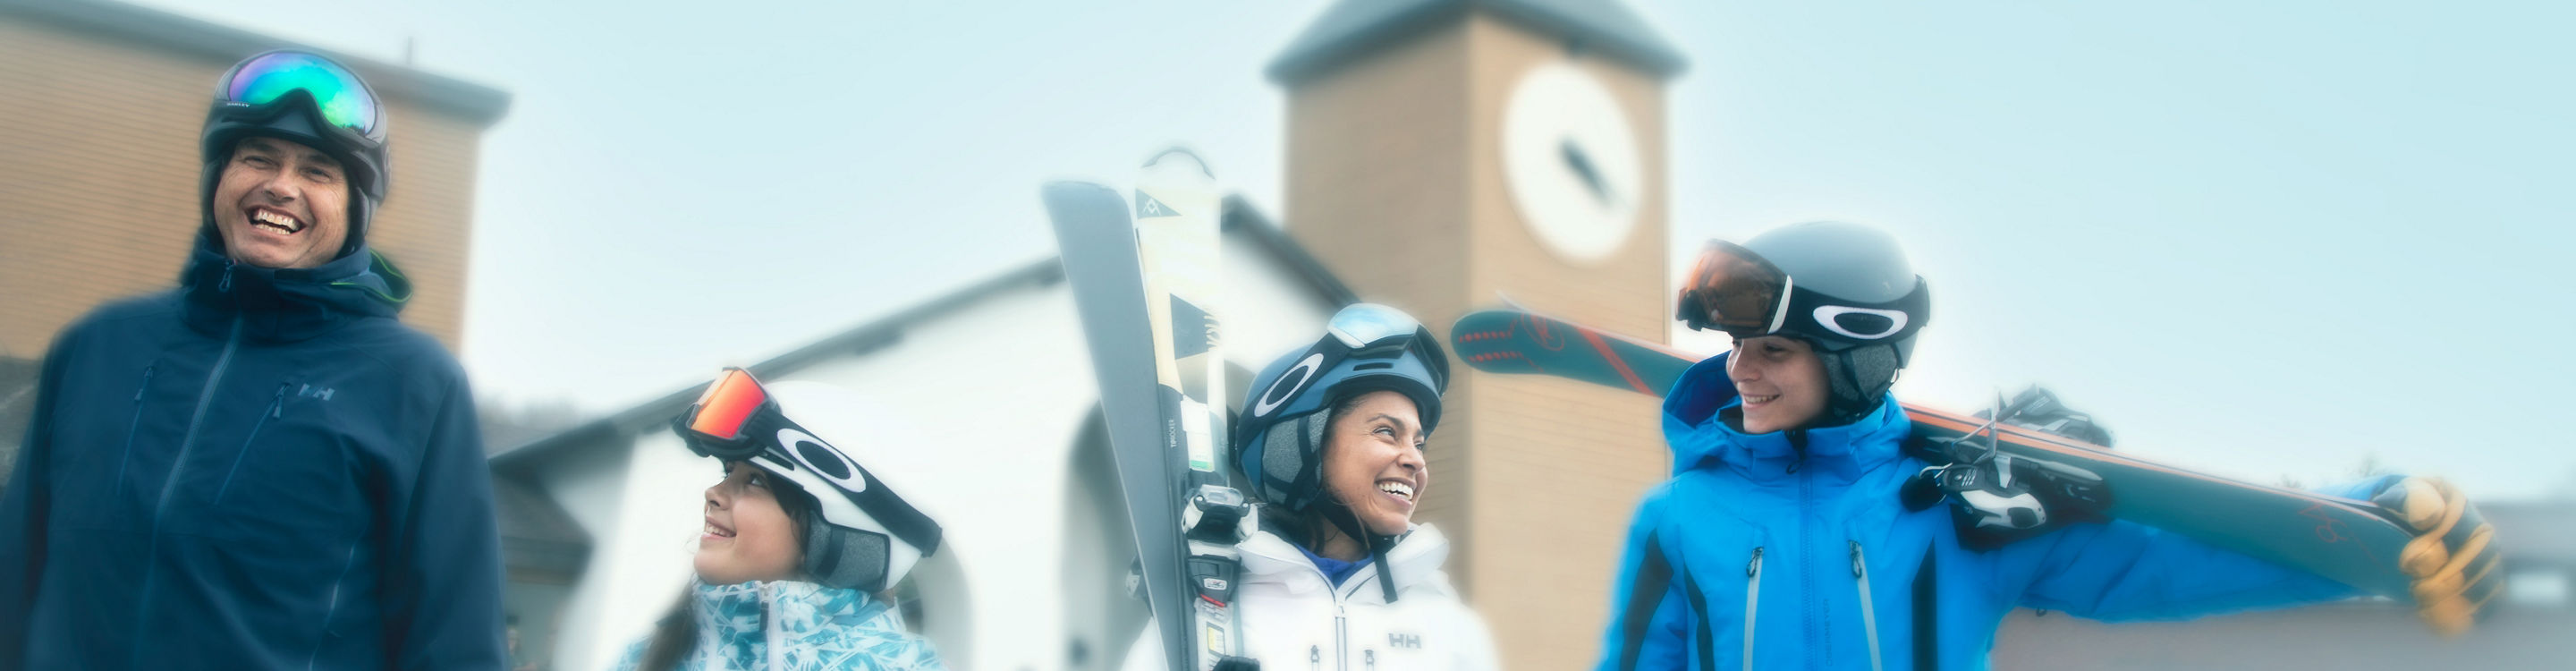 Beginners Guide to Skiing and Snowboarding Okemo Ski Resort